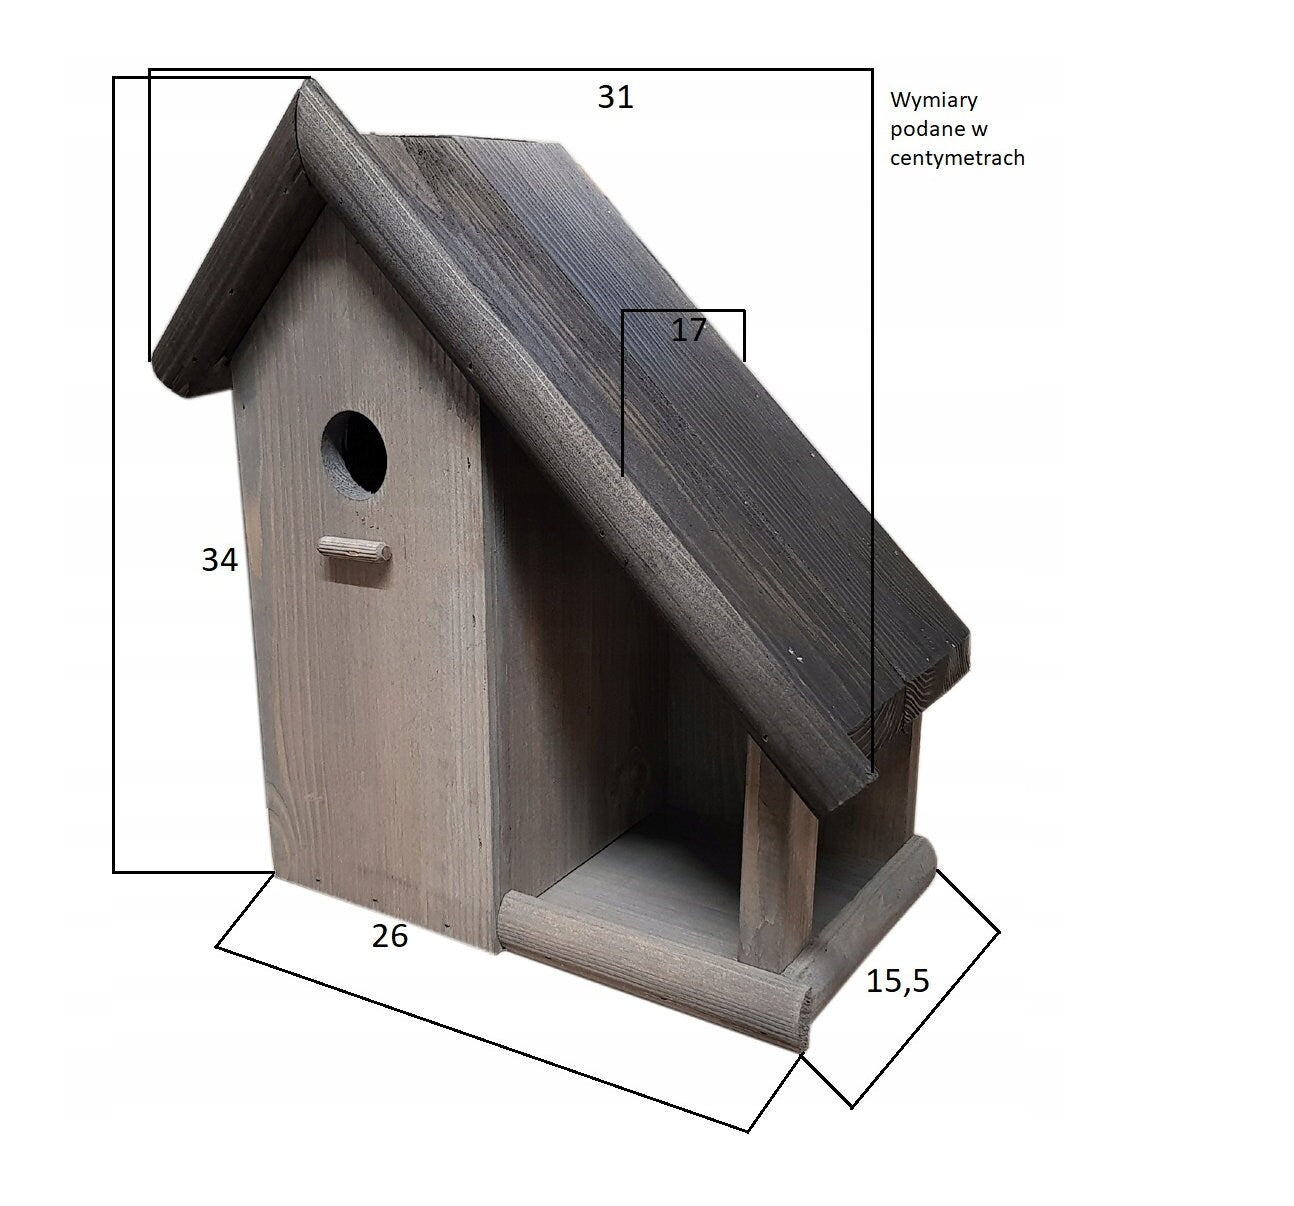 bird feeder for the outdoors |  bird feeder | hanging bird feeder |  wooden bird house | bird lover gift